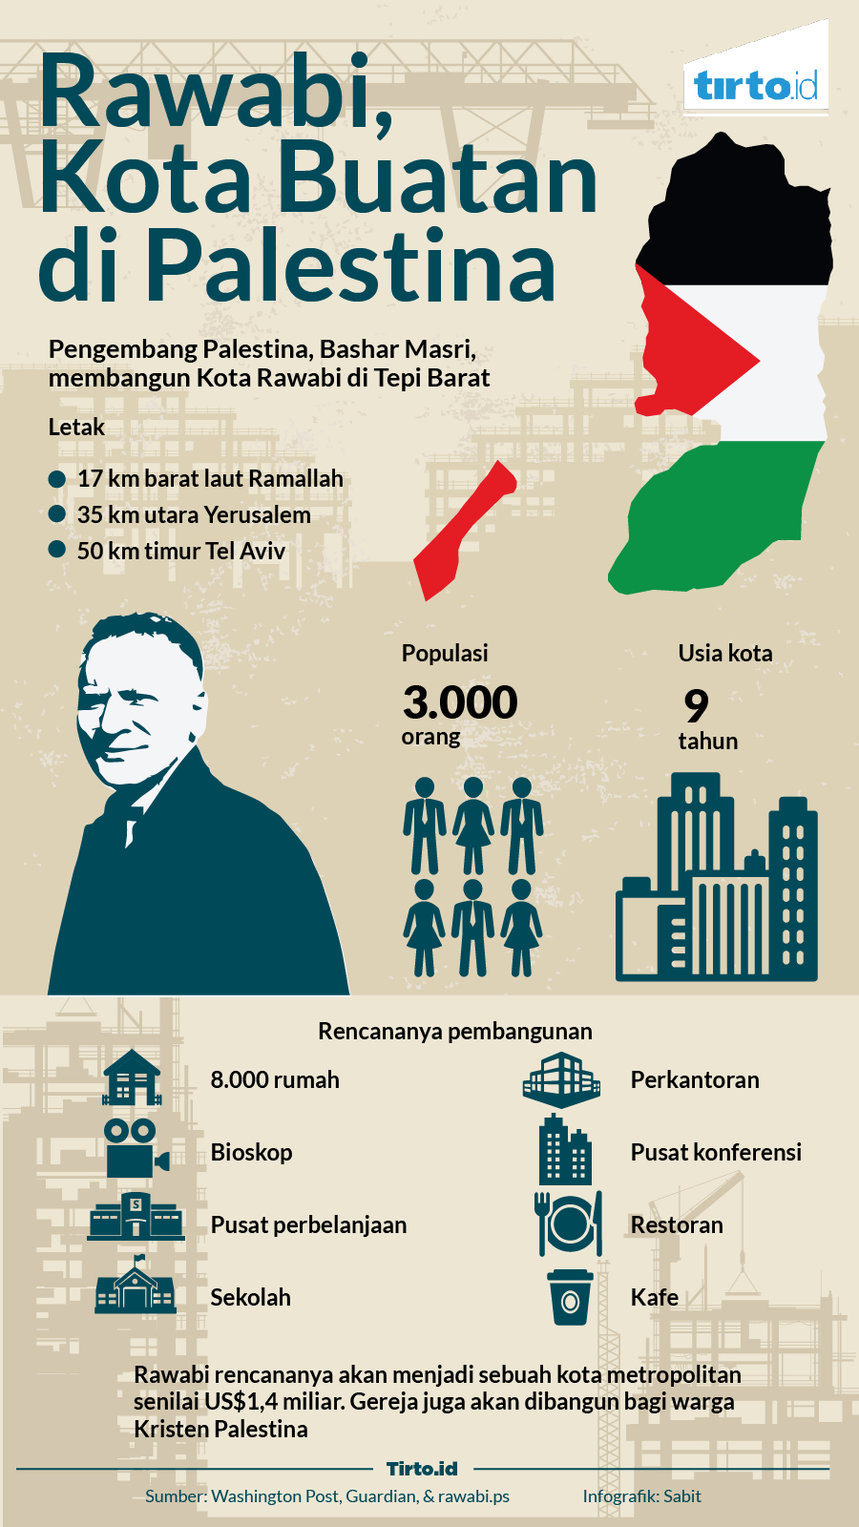 Infografik Rawabi kota buatan di palestina